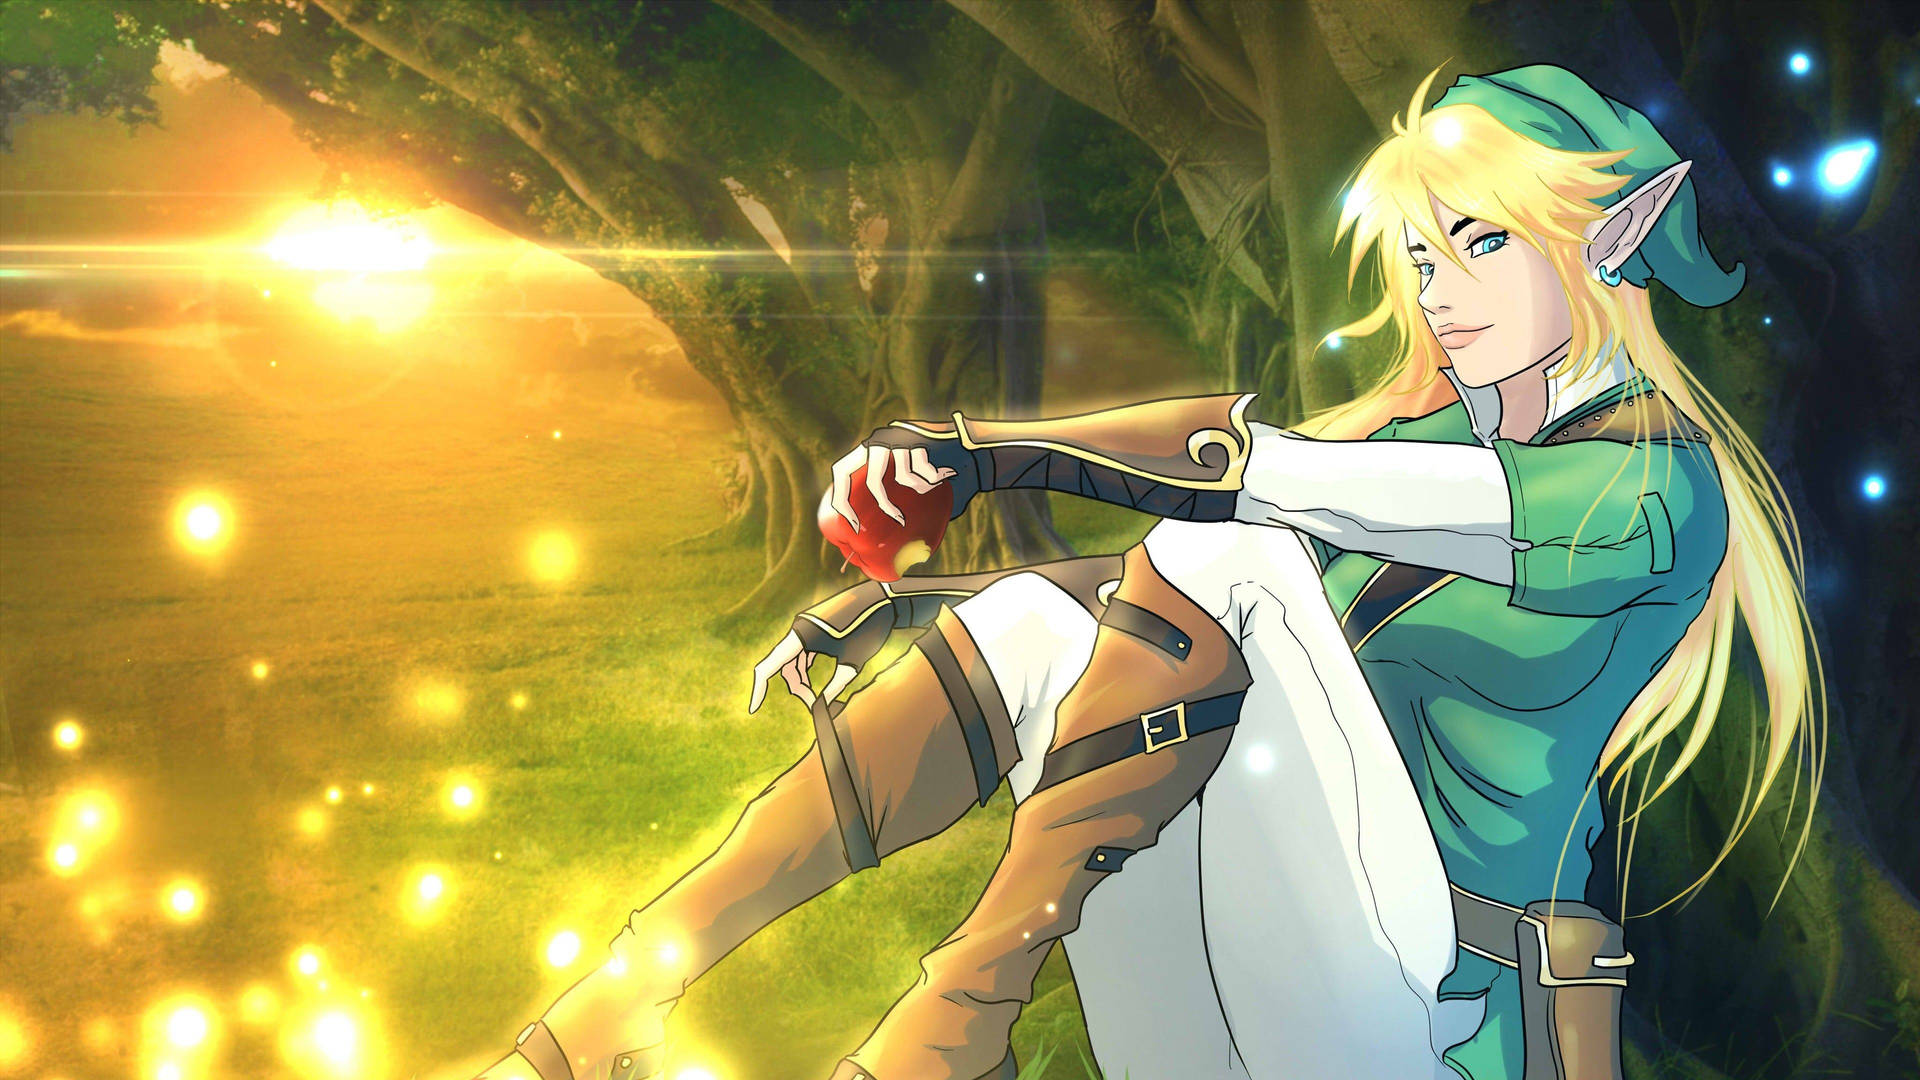 Legend Of Zelda 3840X2160 Wallpaper and Background Image